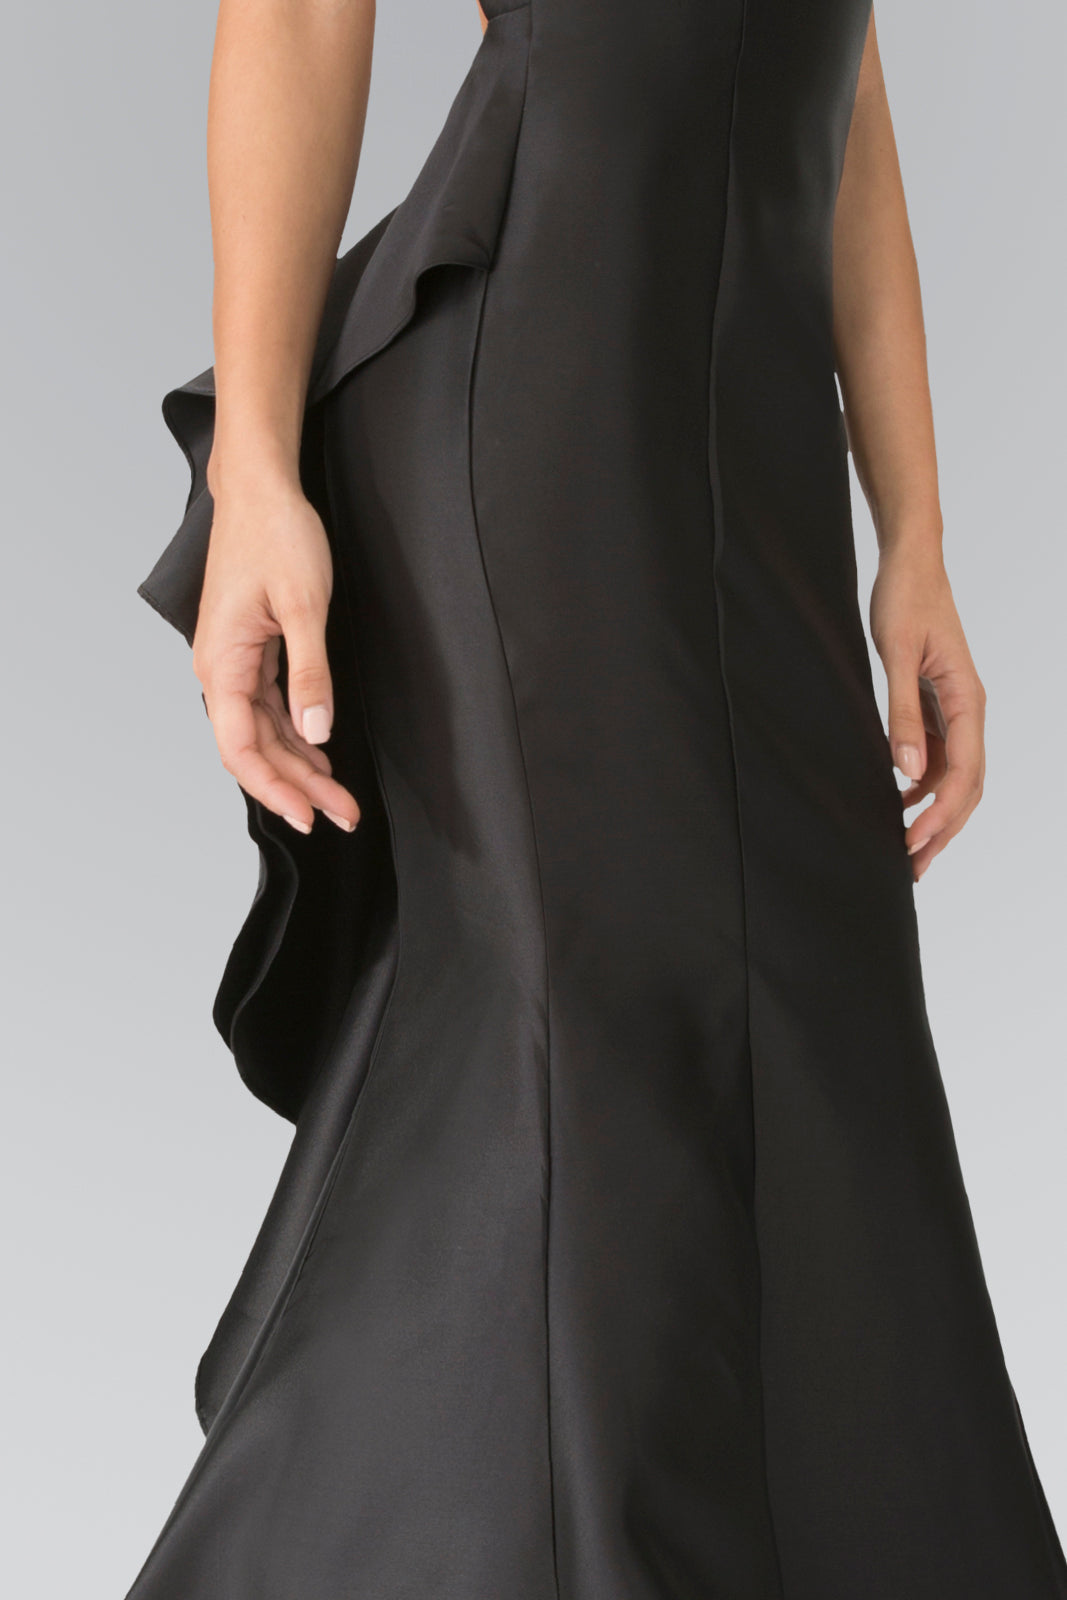 V-Neck Open Back Floor Length Dress with Back Ruffles GLGL2224 Elsy Style PROM